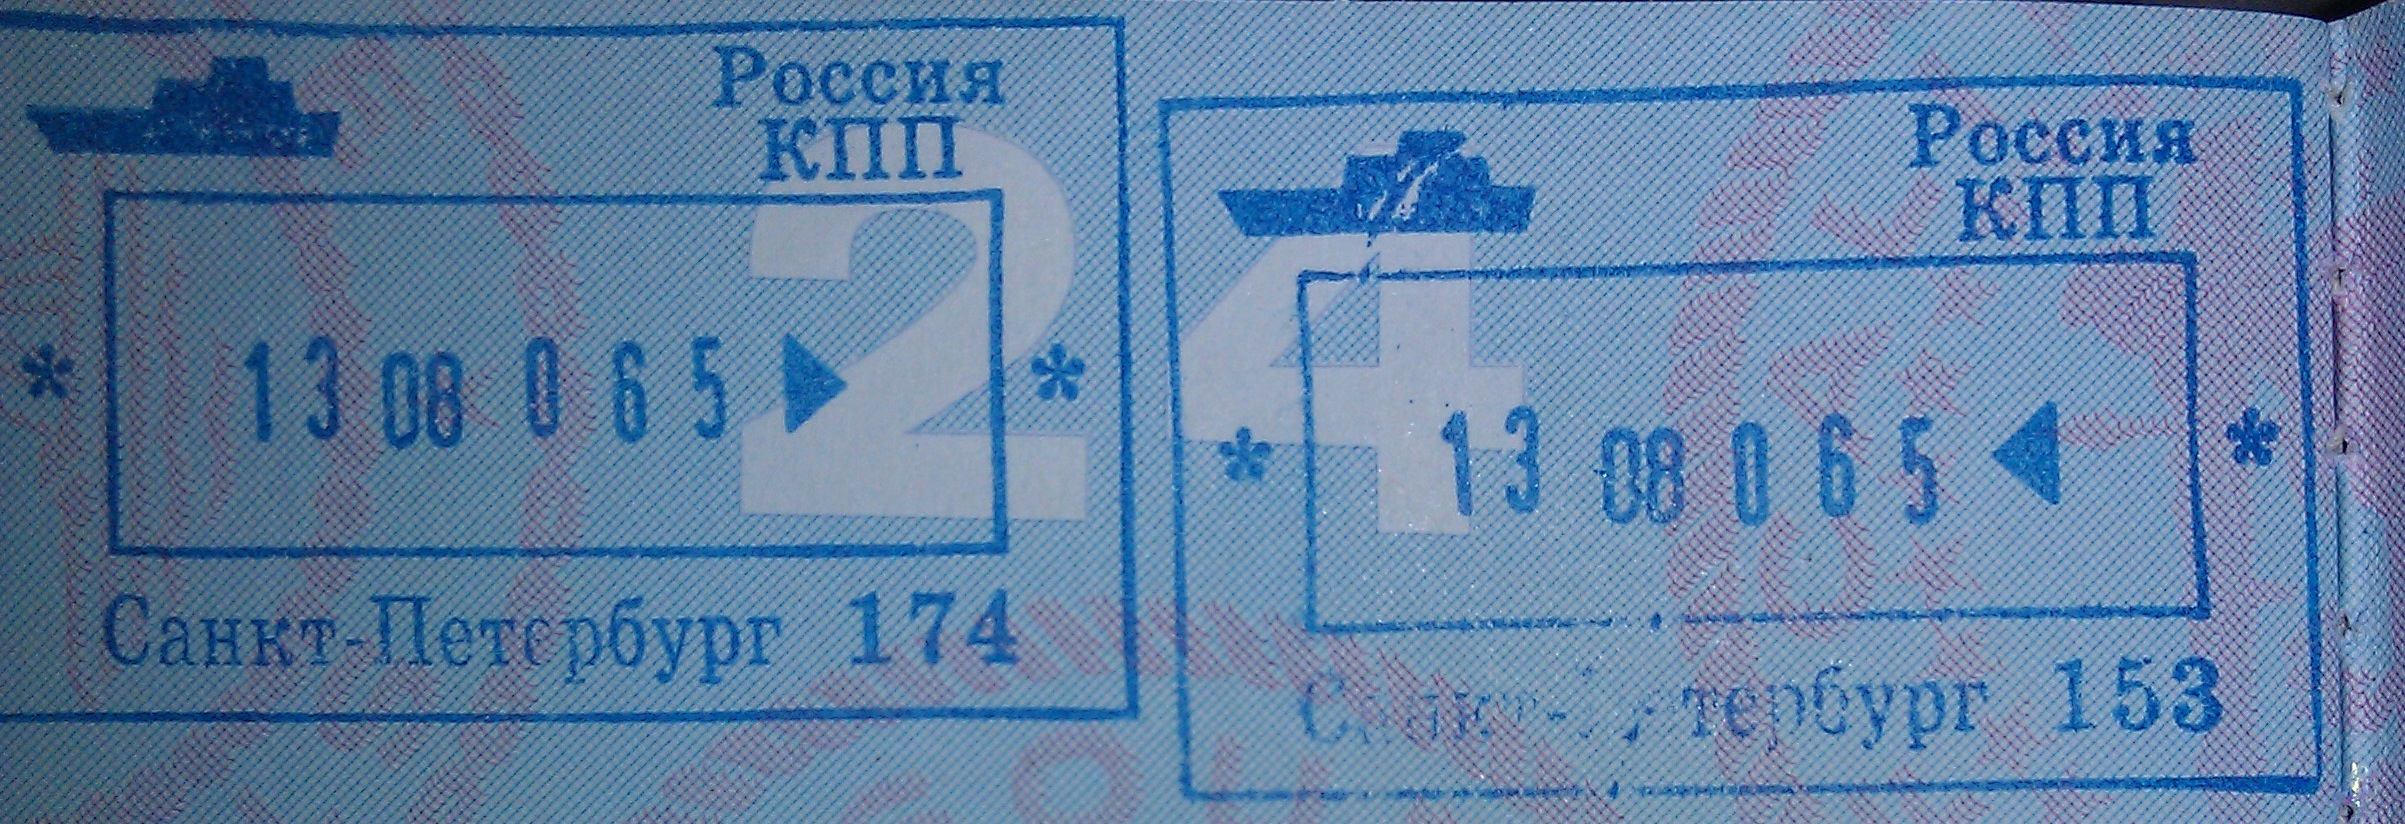 passport stamp template